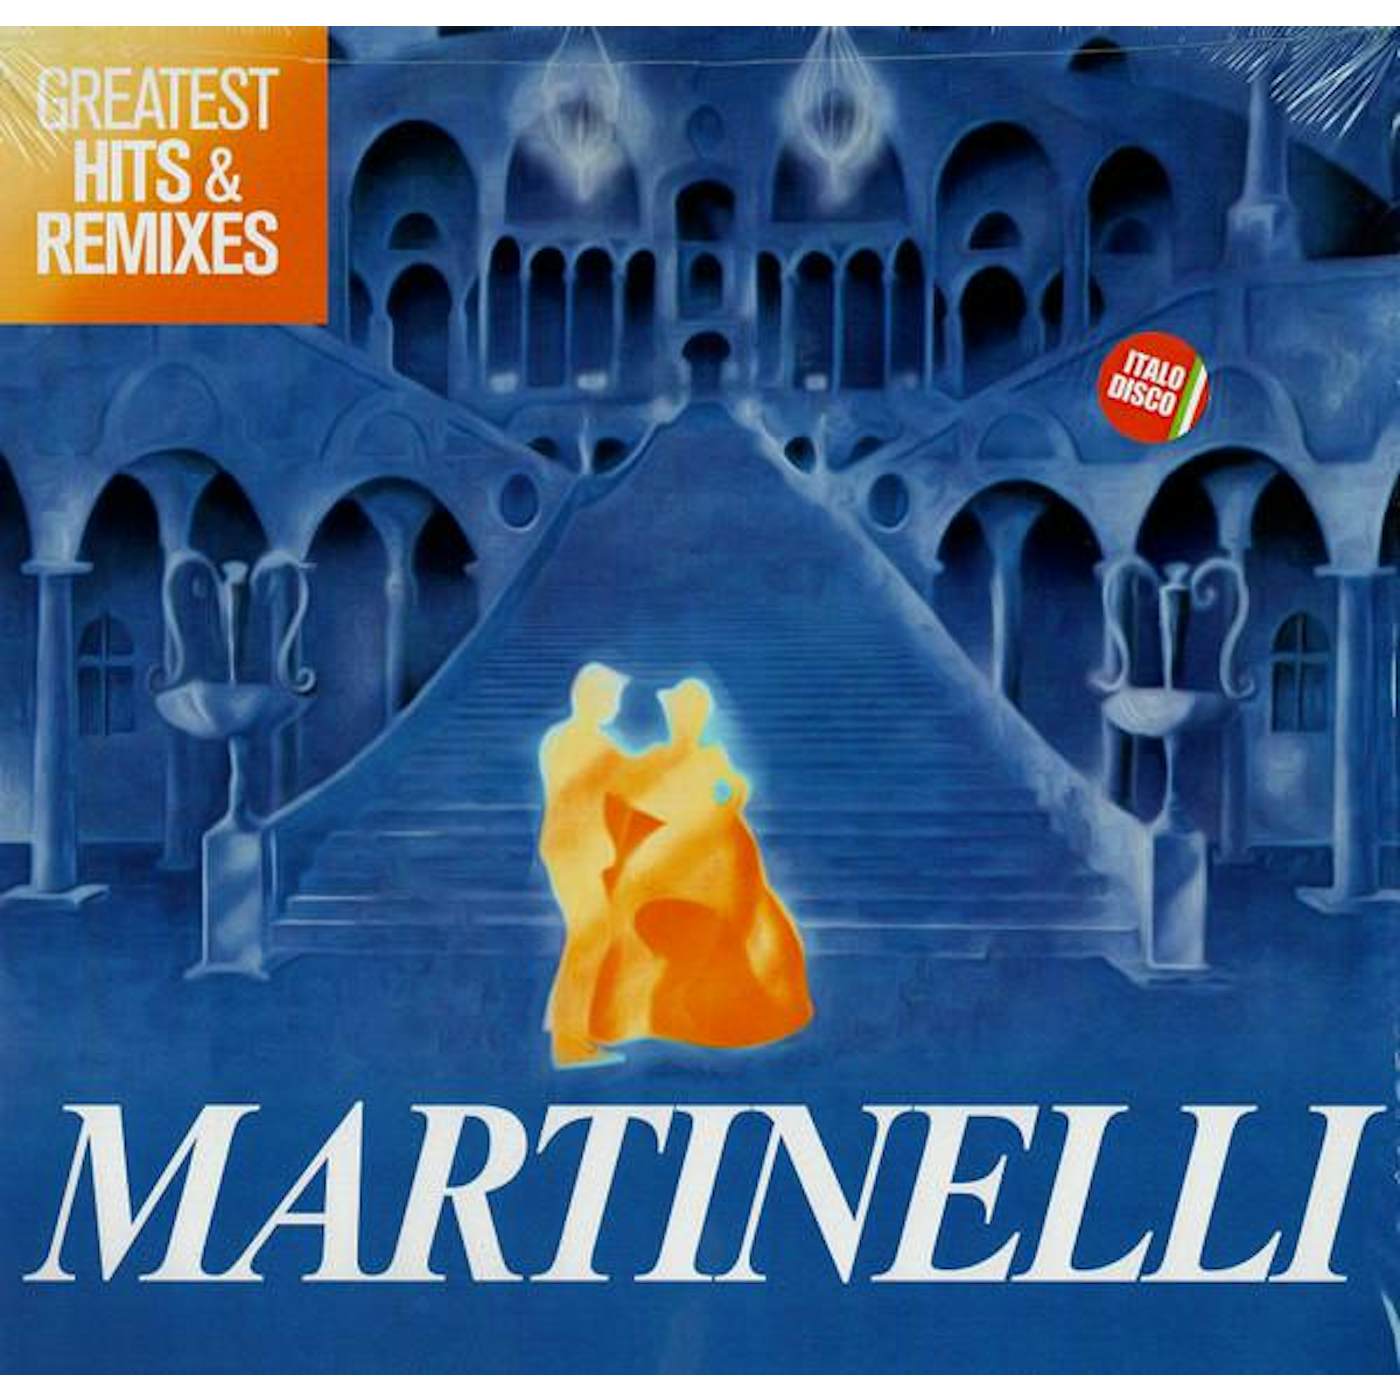 Martinelli GREATEST HITS & REMIXES (IMPORT) Vinyl Record